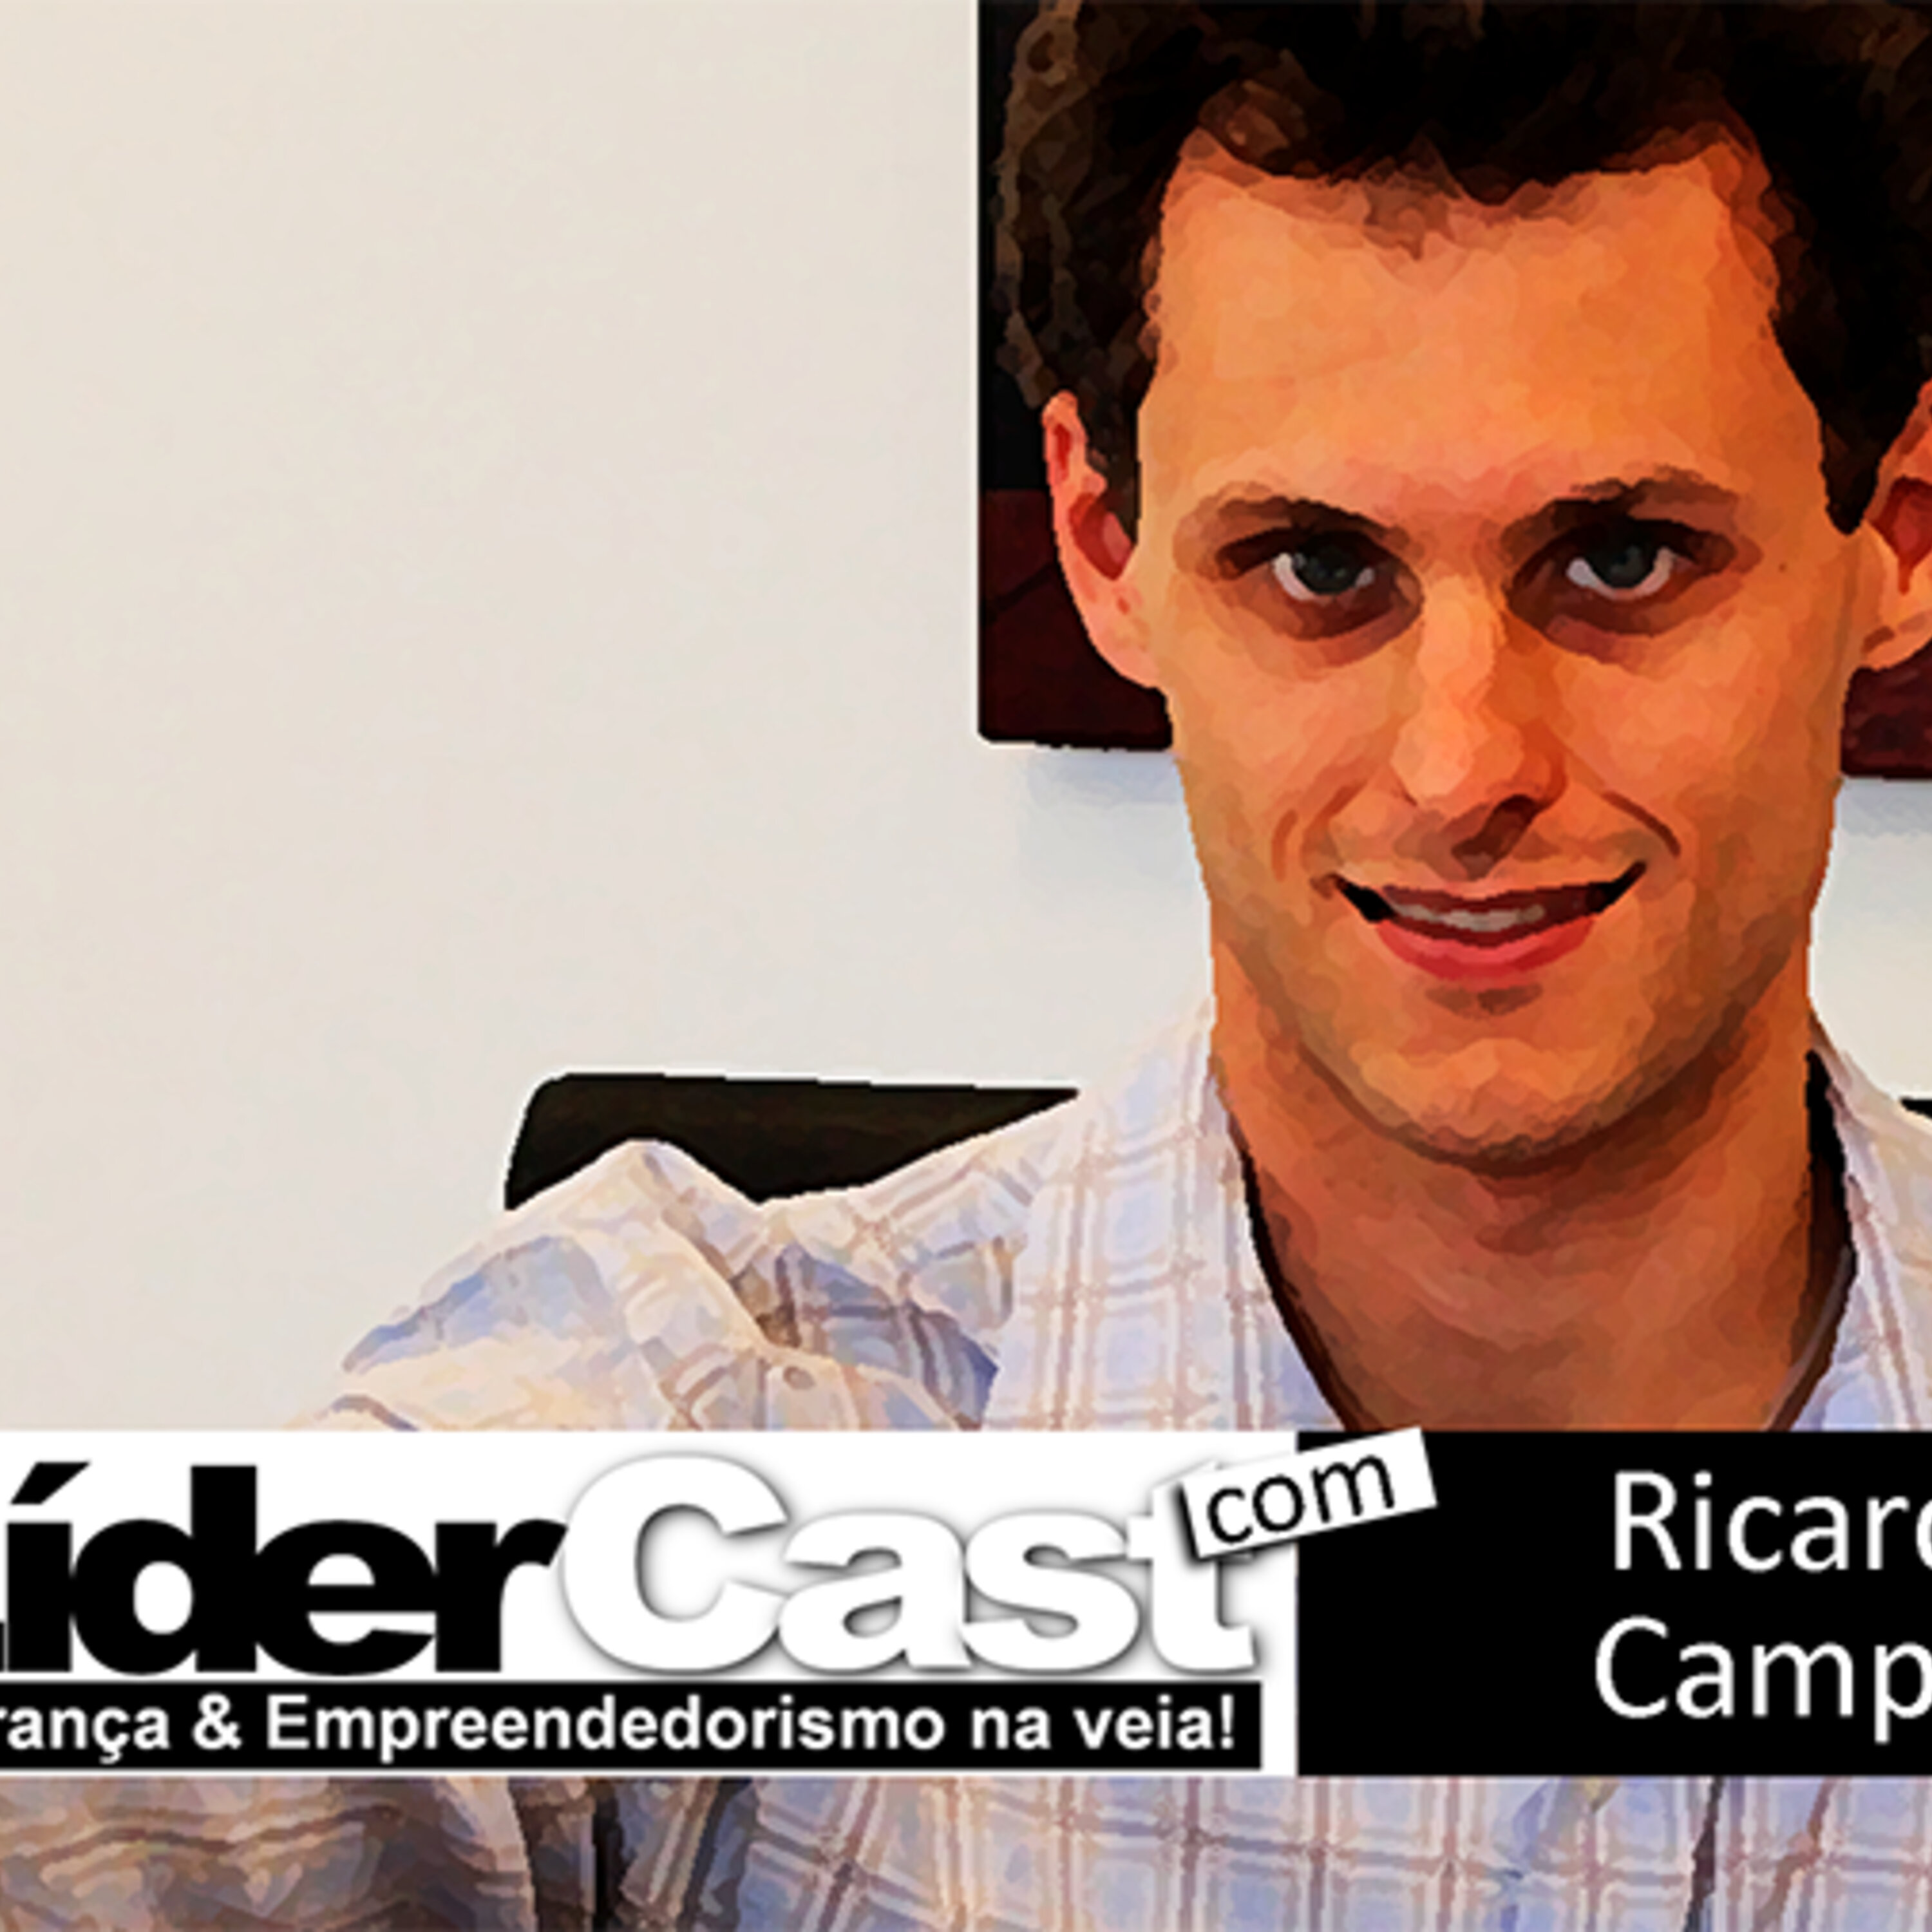 LíderCast 087 – Ricardo Camps